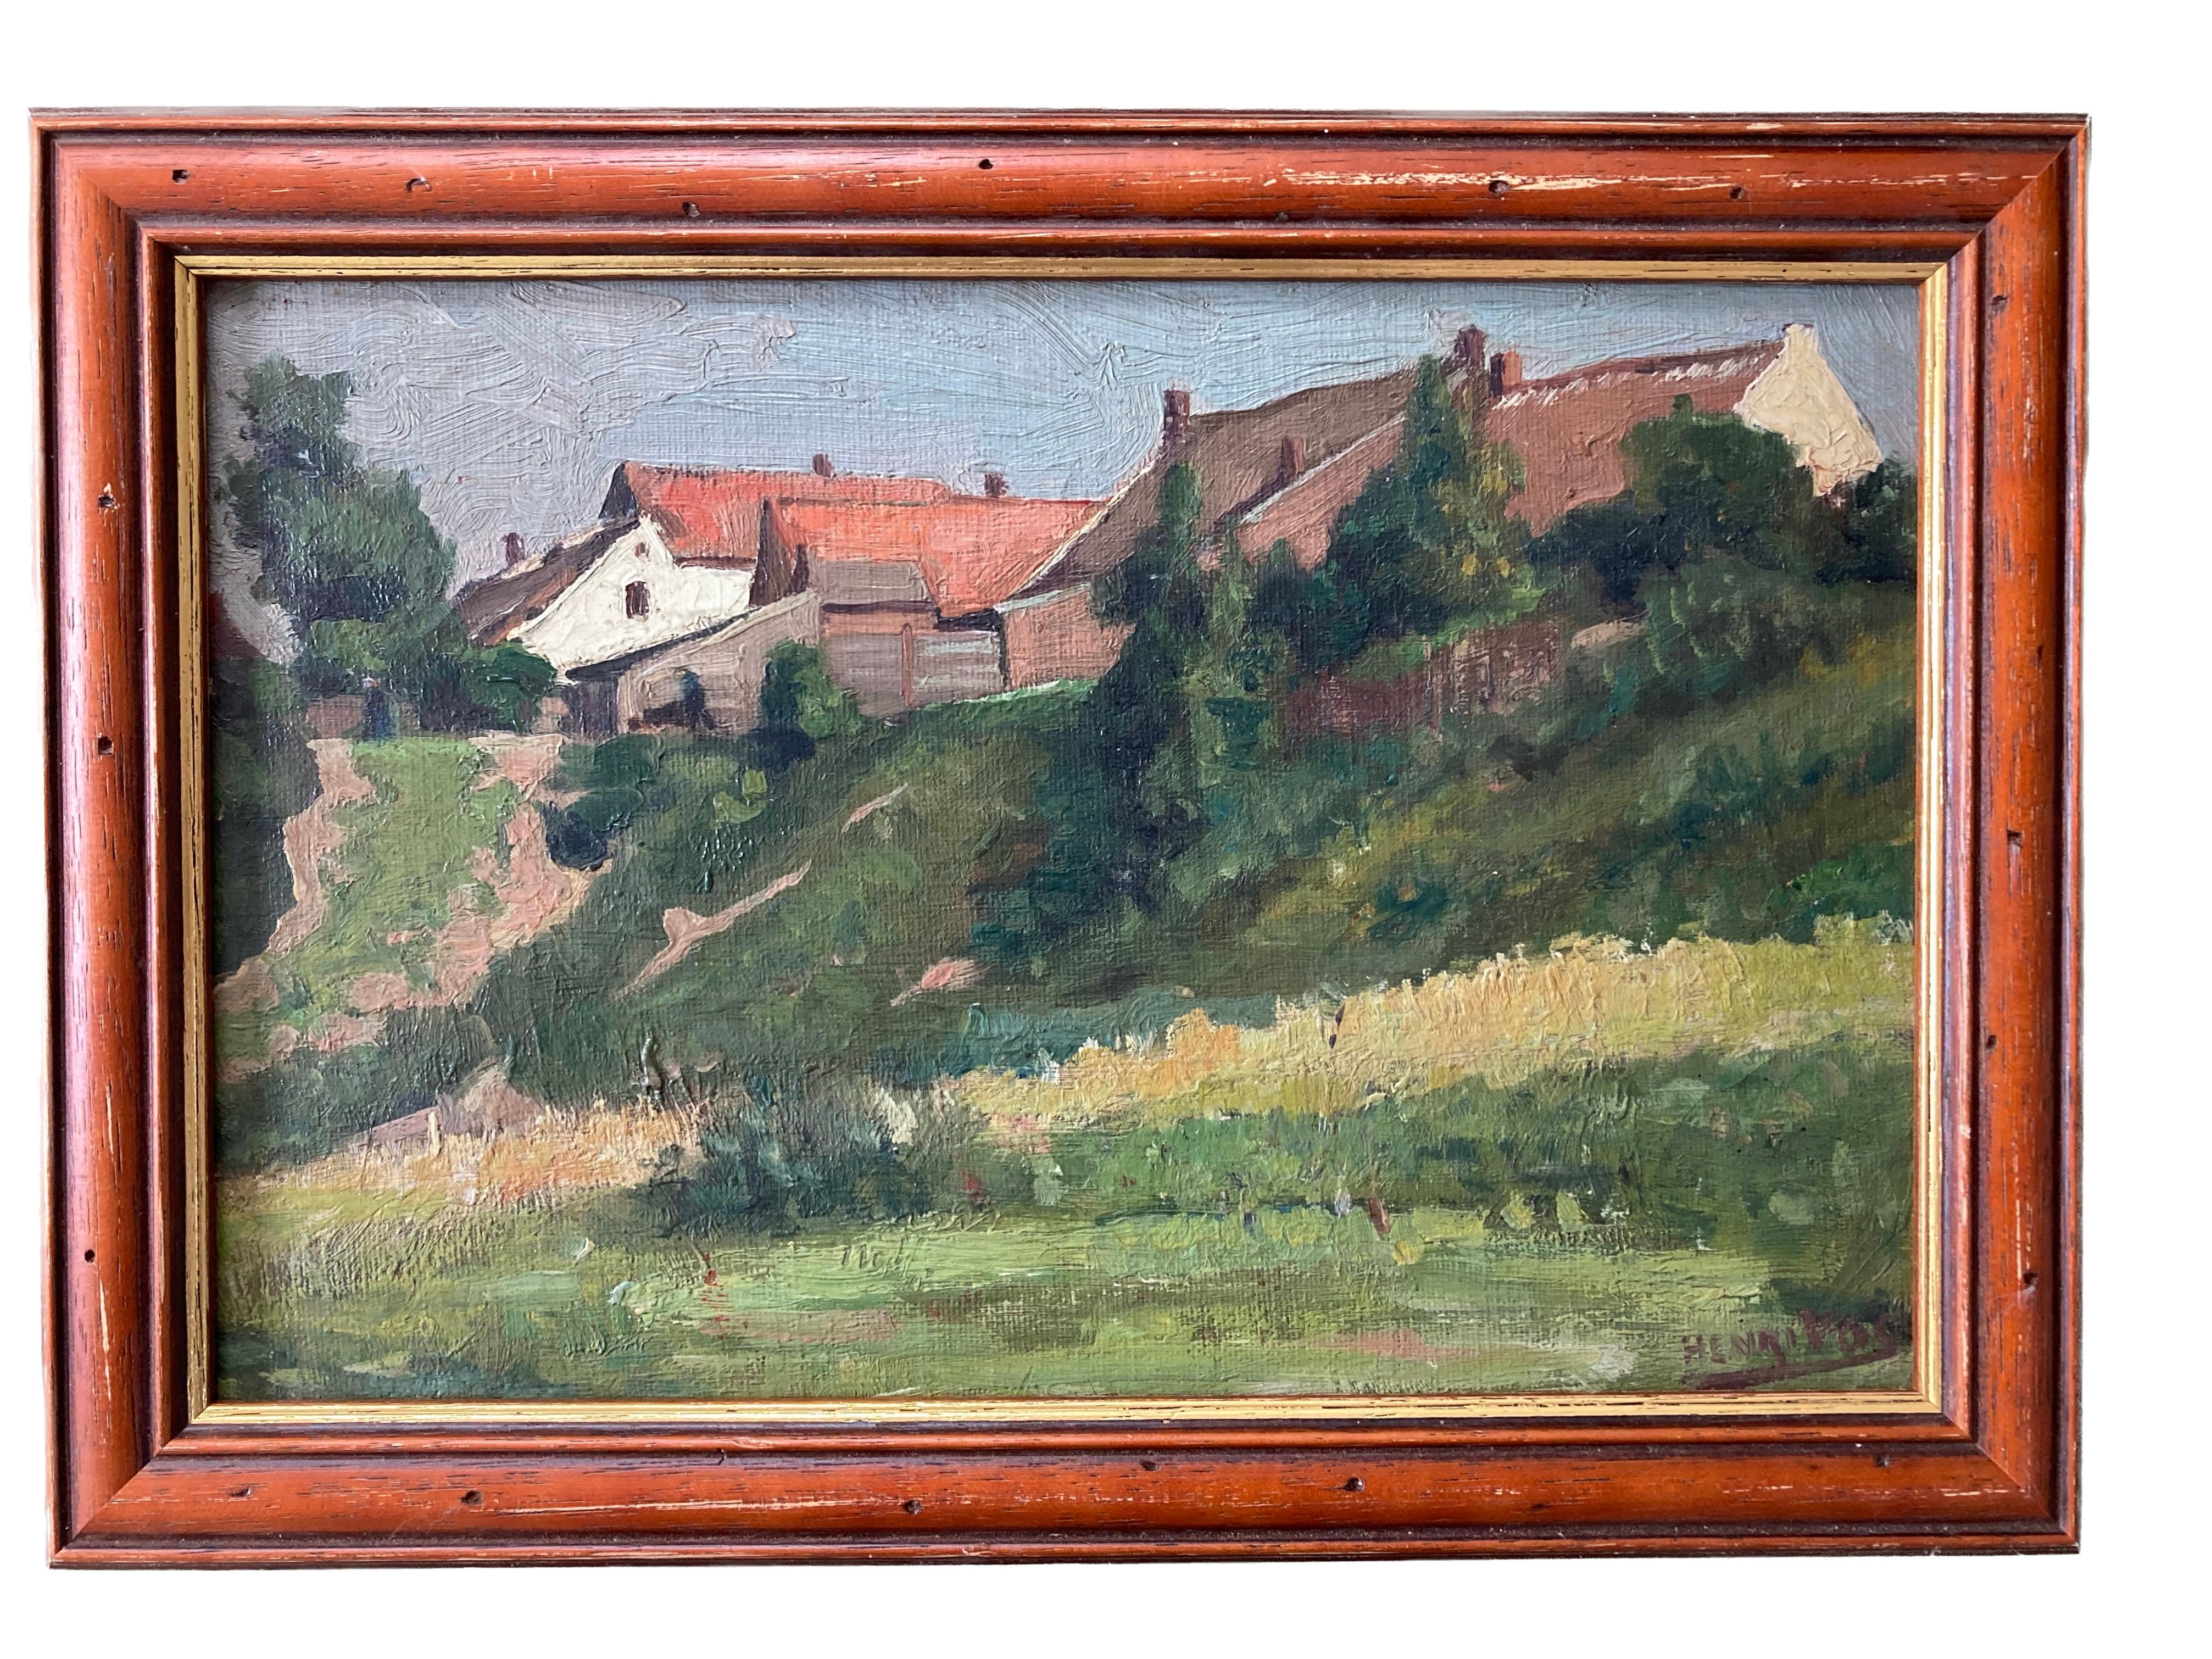 Belgian Impressionist painting of a sunlit village